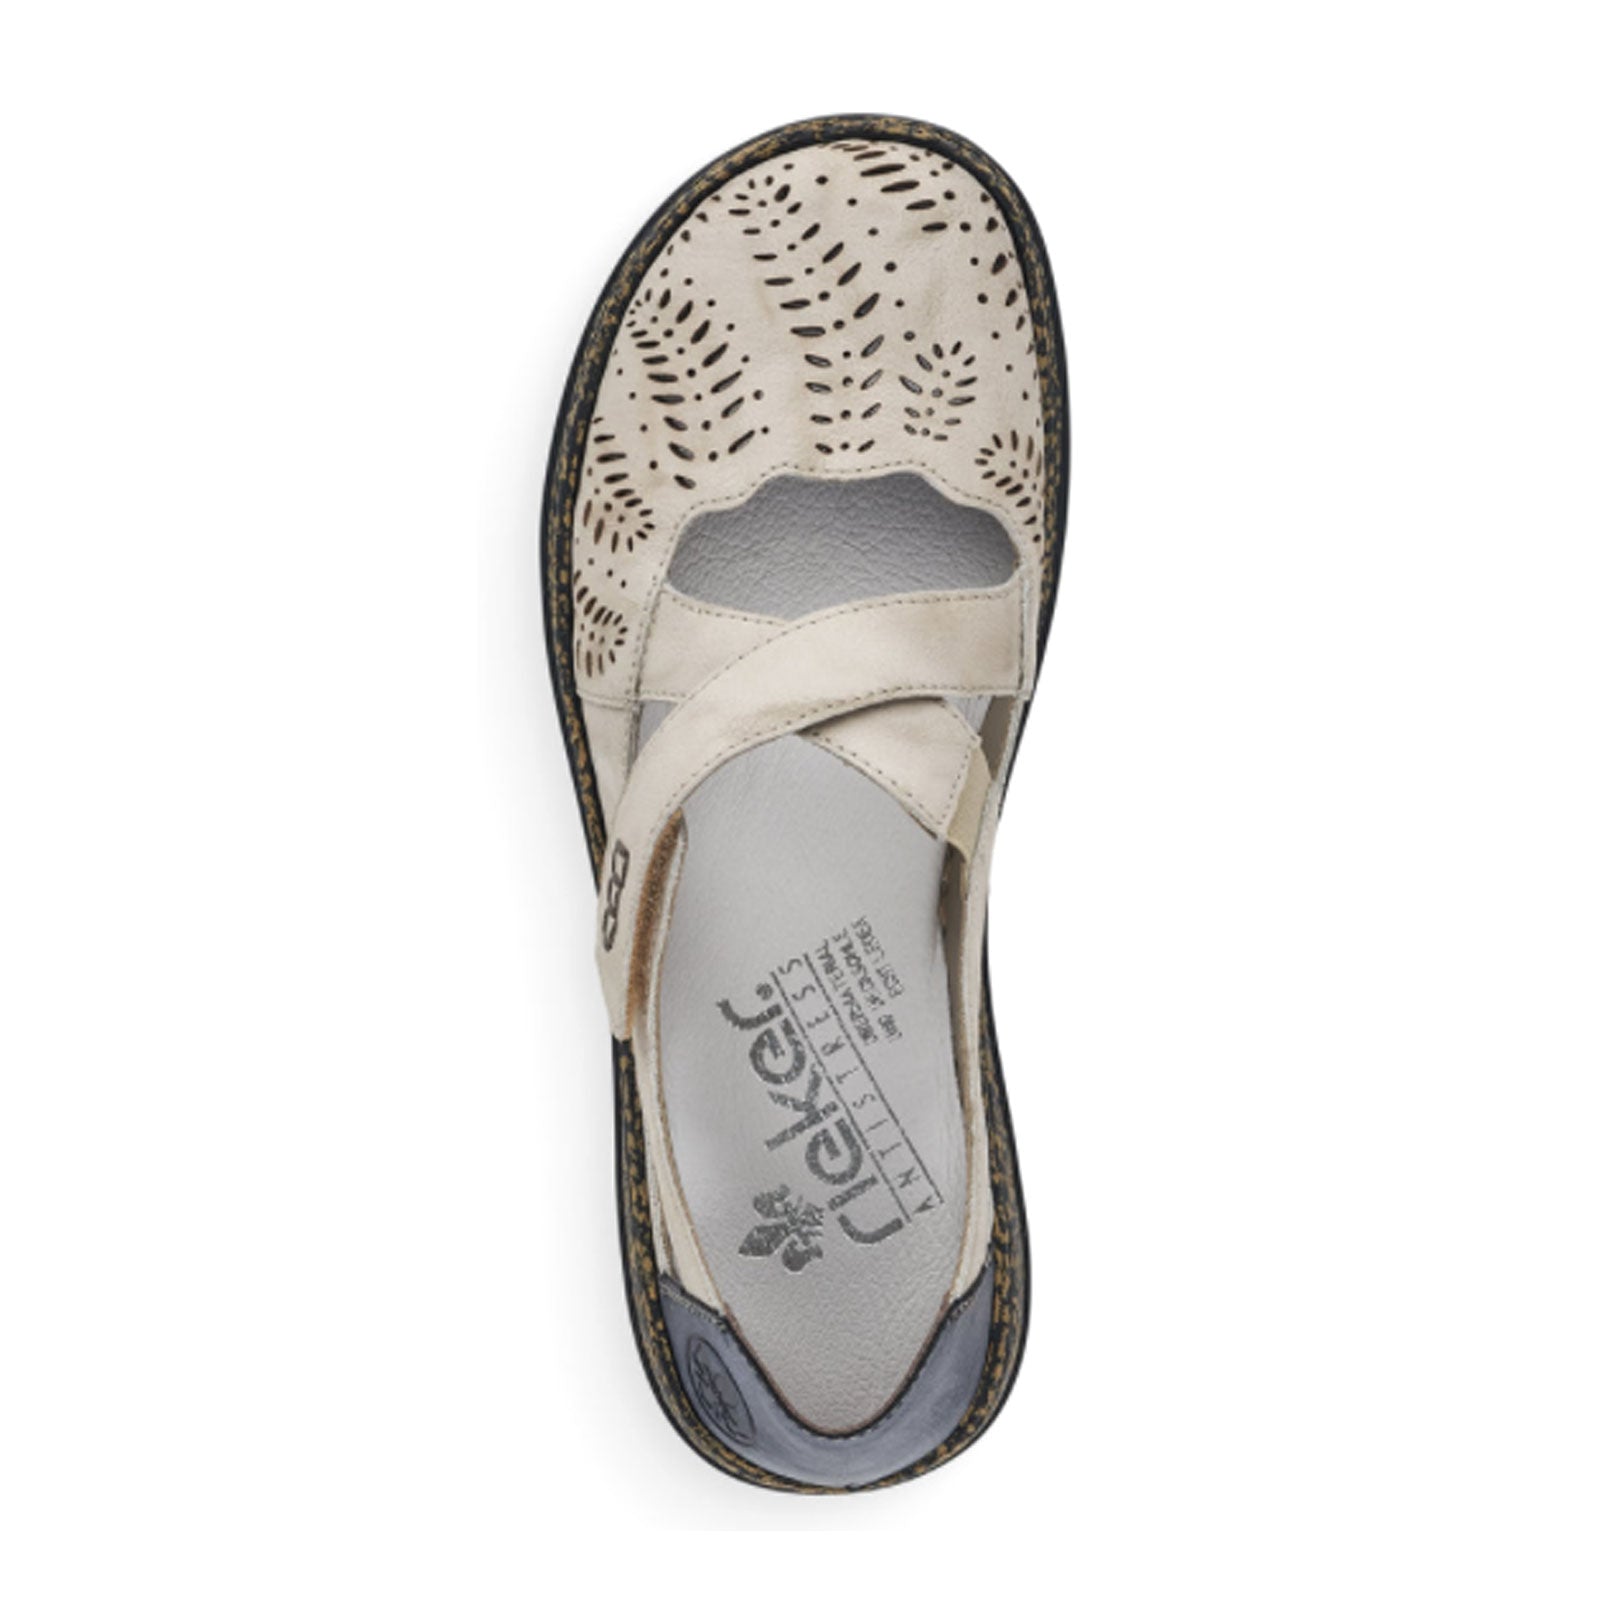 Rieker 46375-60 (Women) - Marble/Jeans Dress-Casual - Mary Janes - The Heel Shoe Fitters